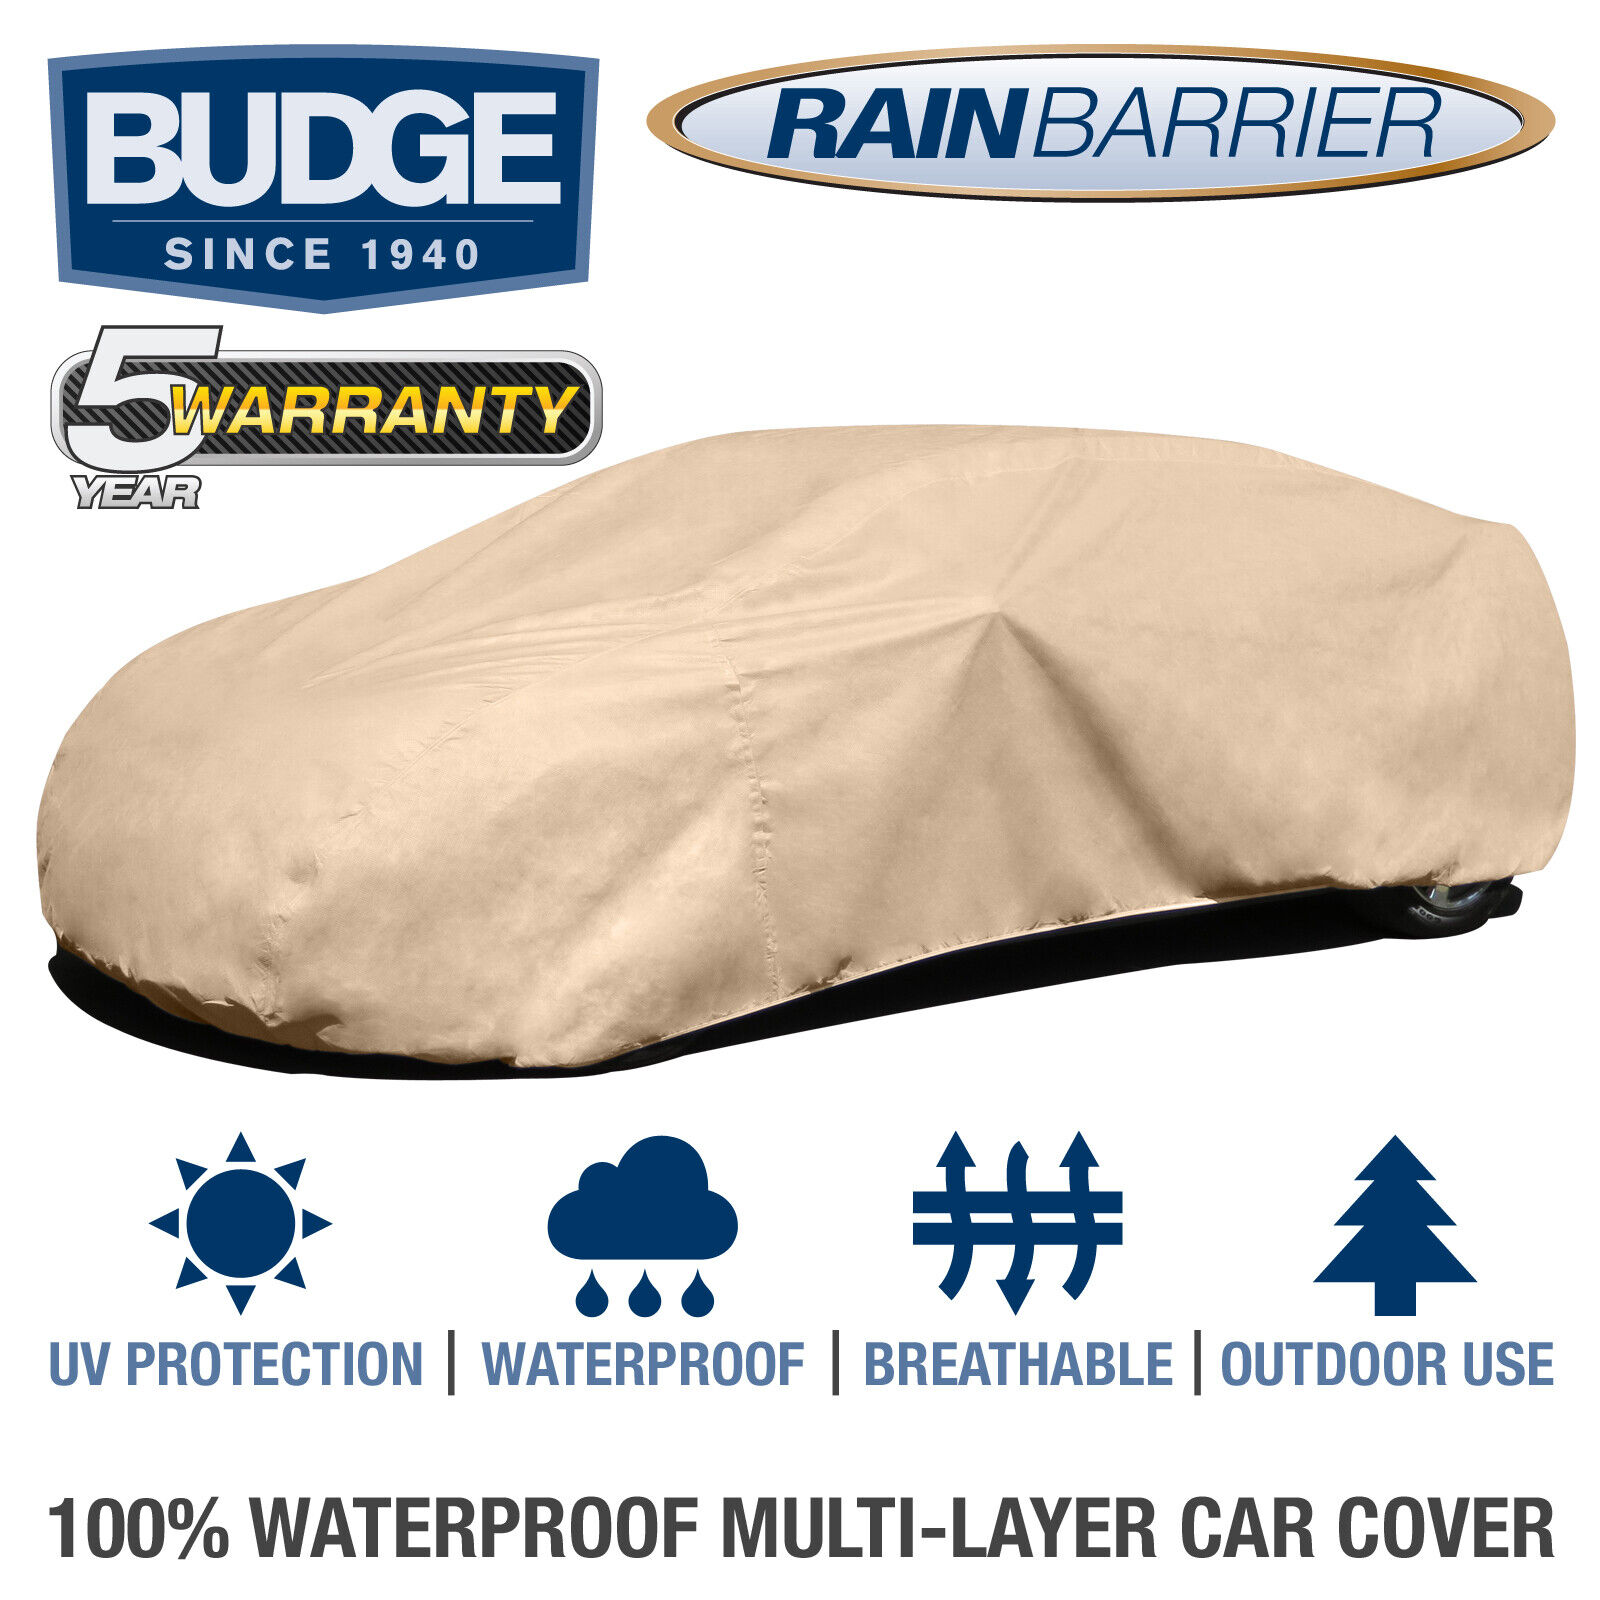 Budge Rain Barrier Car Cover Fits Jaguar XF 2012 | Waterproof | Breathable